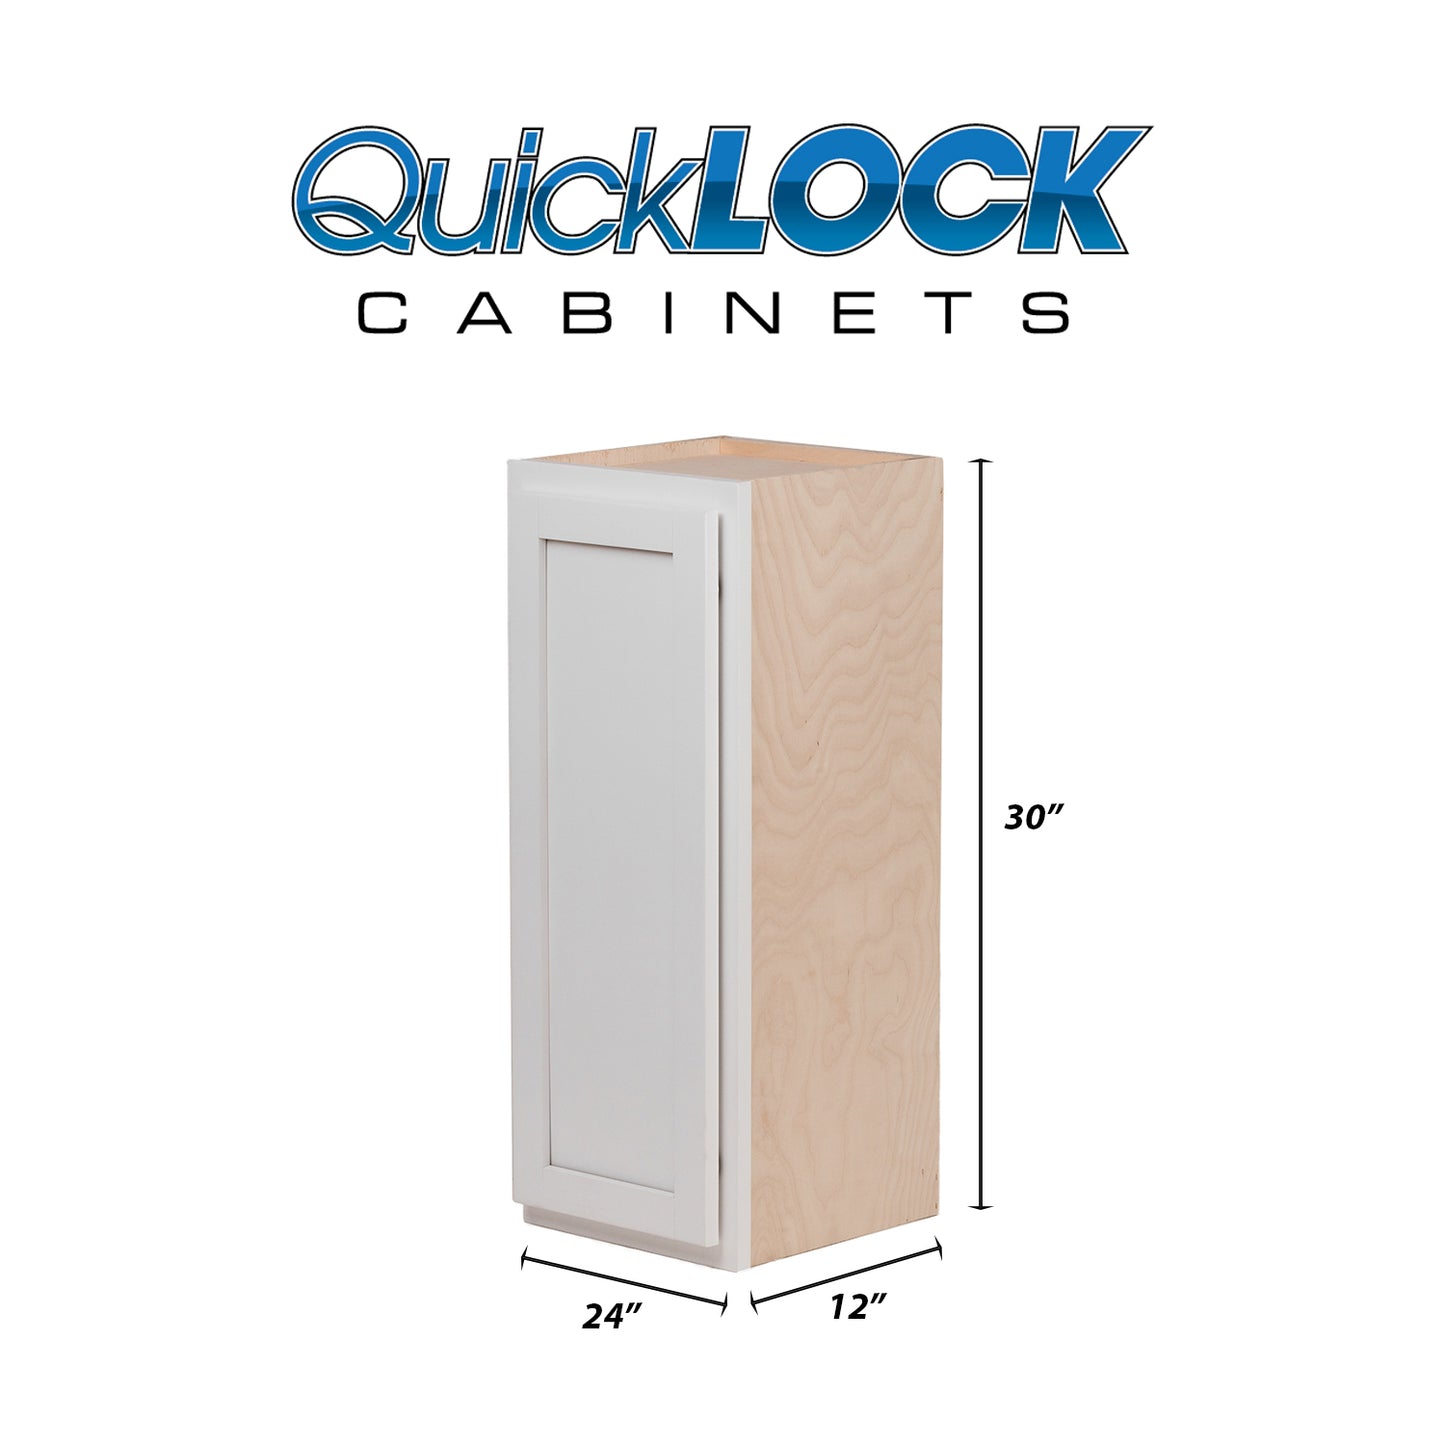 Quicklock RTA (Ready-to-Assemble) Pure White 24"Wx30"Hx12"D Wall Cabinet